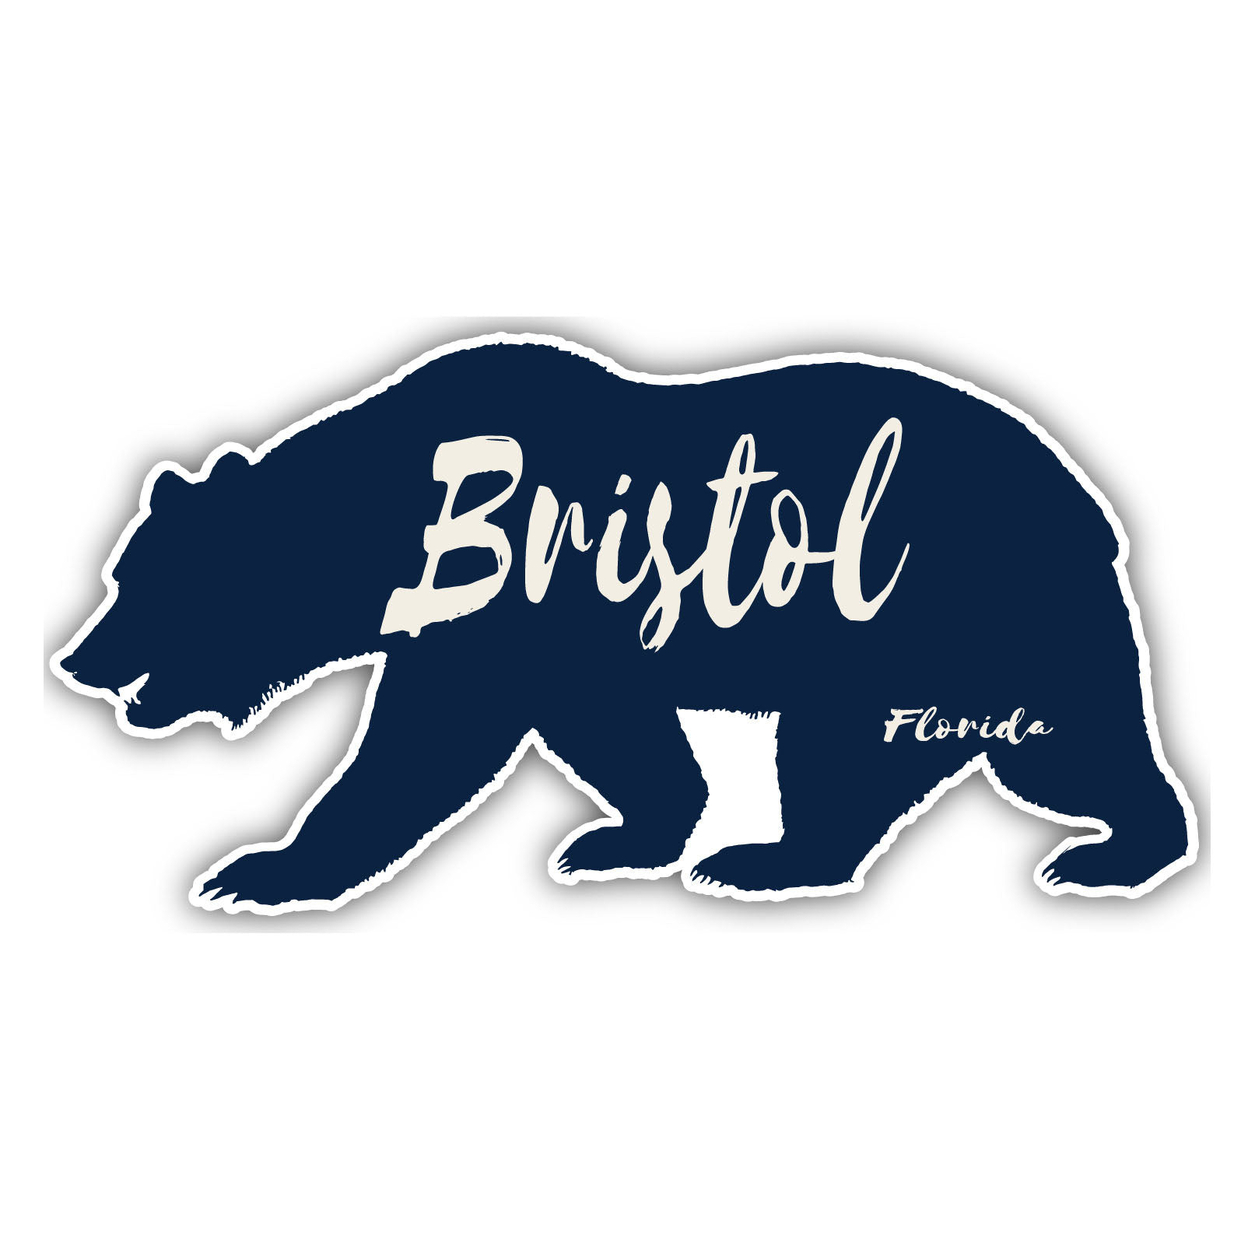 Bristol Florida Souvenir Decorative Stickers (Choose Theme And Size) - 4-Pack, 12-Inch, Bear